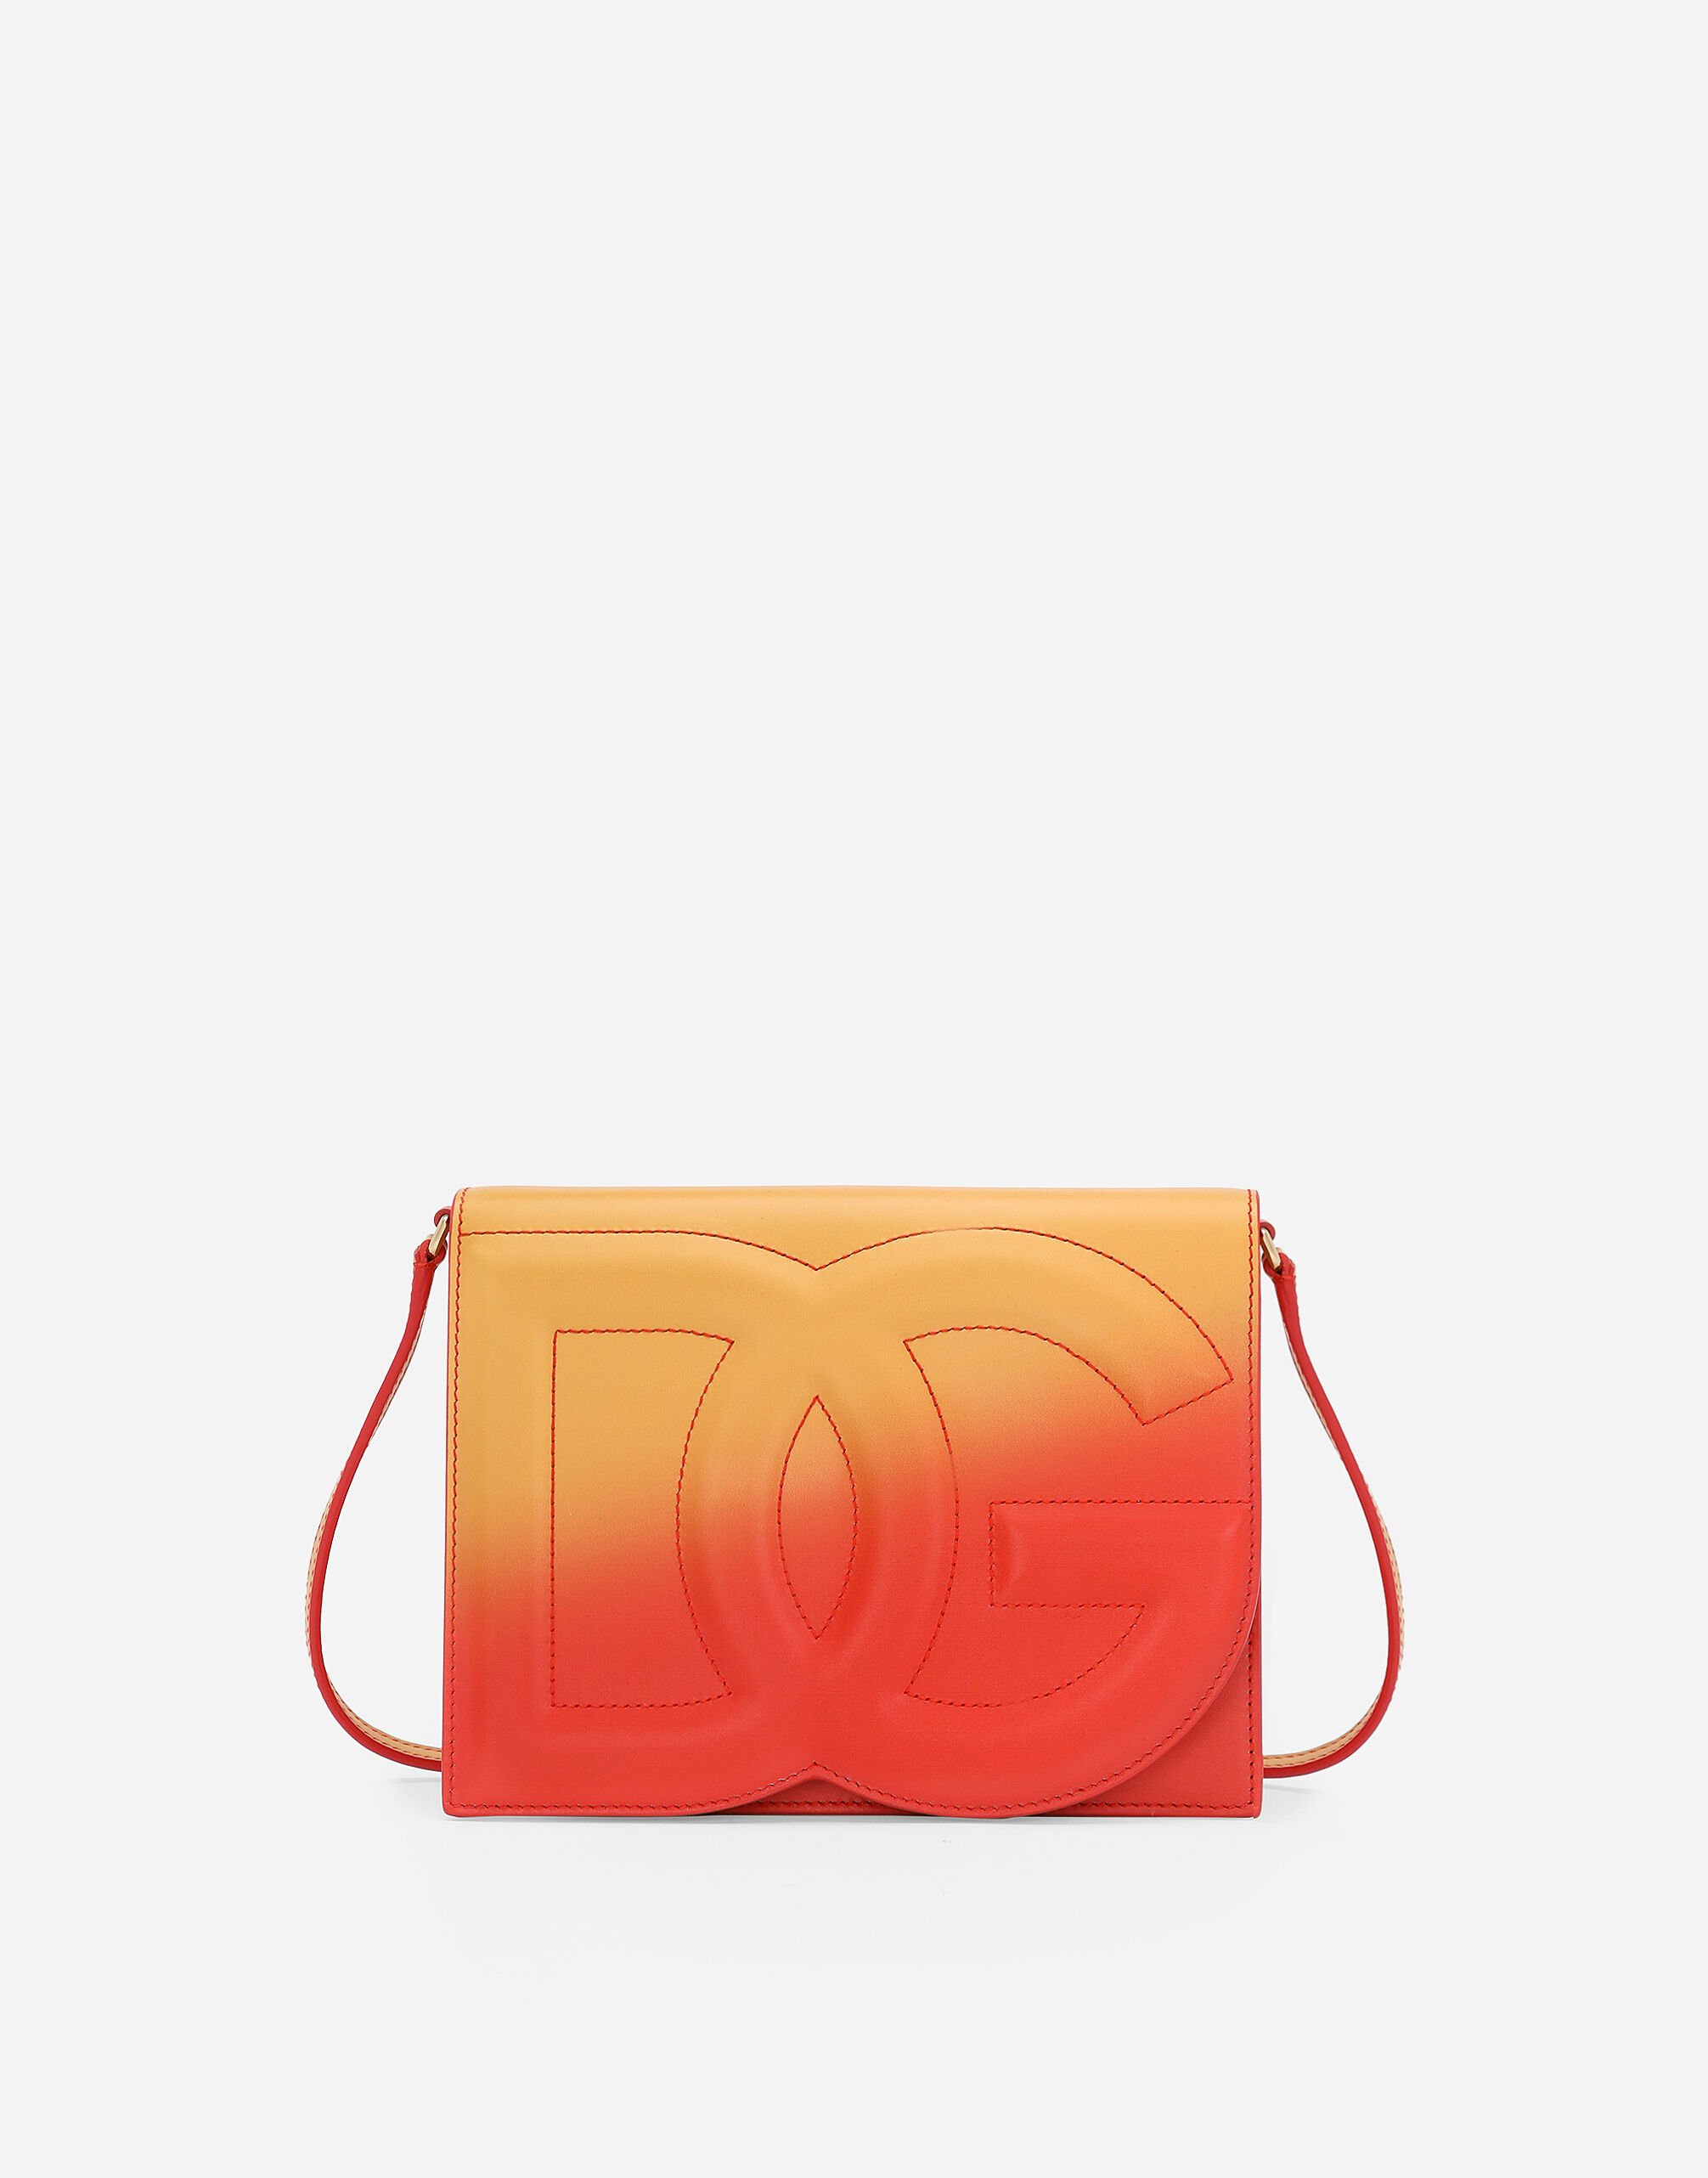 Dolce & Gabbana DG Logo Bag 斜挎包 粉红 BB7287AS204